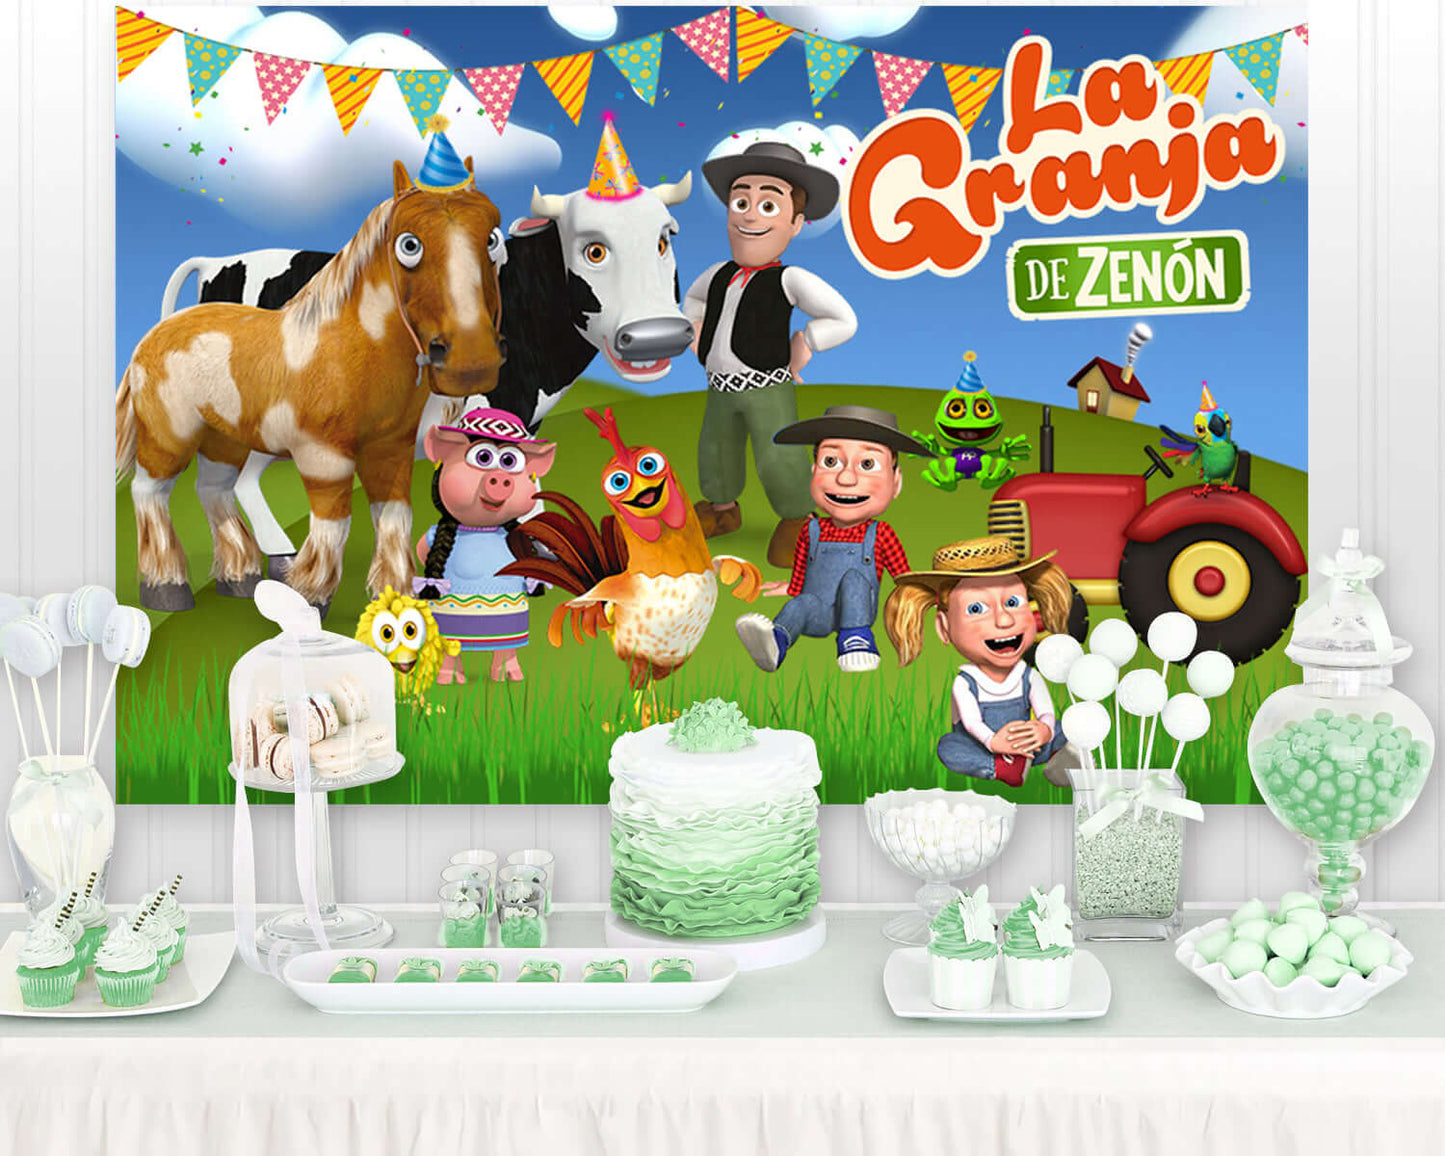 Customize La Granja De Zenon Photo Backdrop Kids Birthday